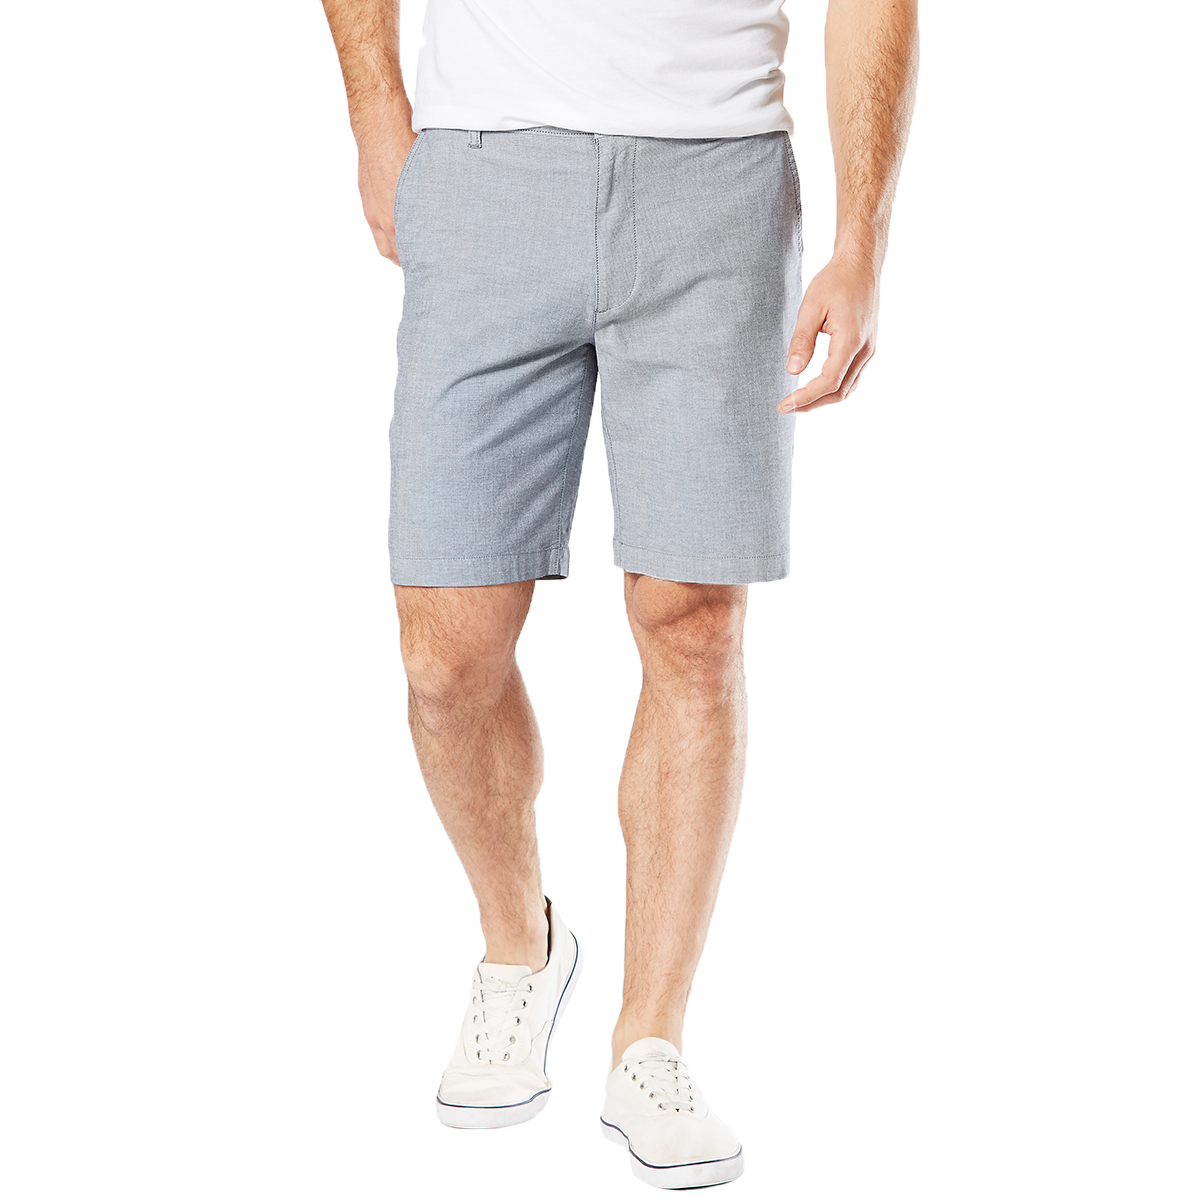 Dockers Men's The Perfect Print Shorts - Blue, 36